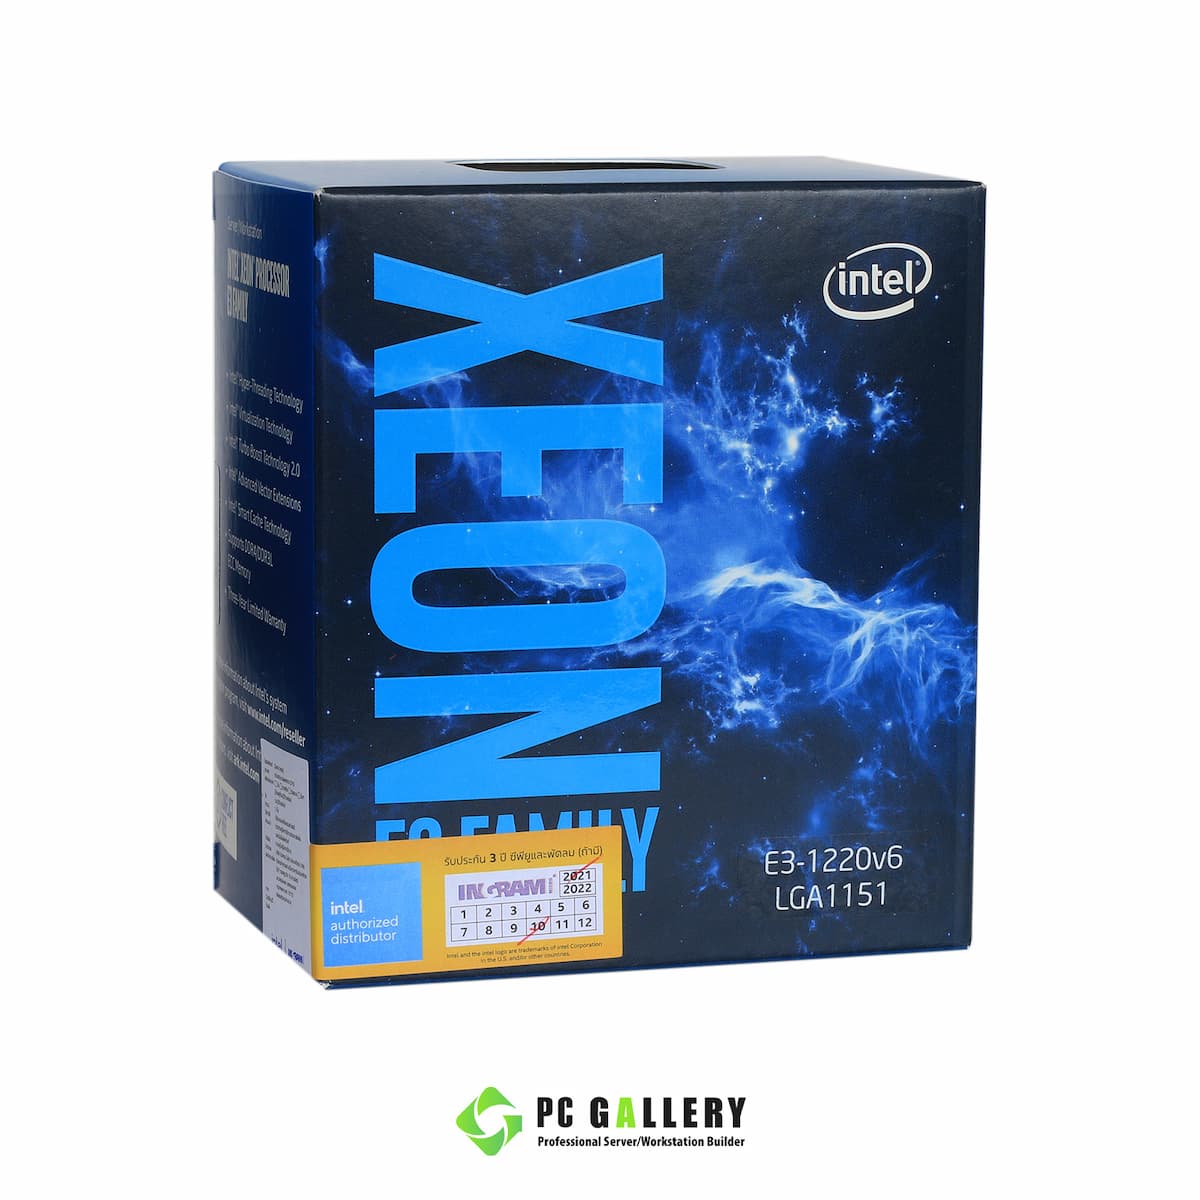 Intel-Xeon-E3-1220v6